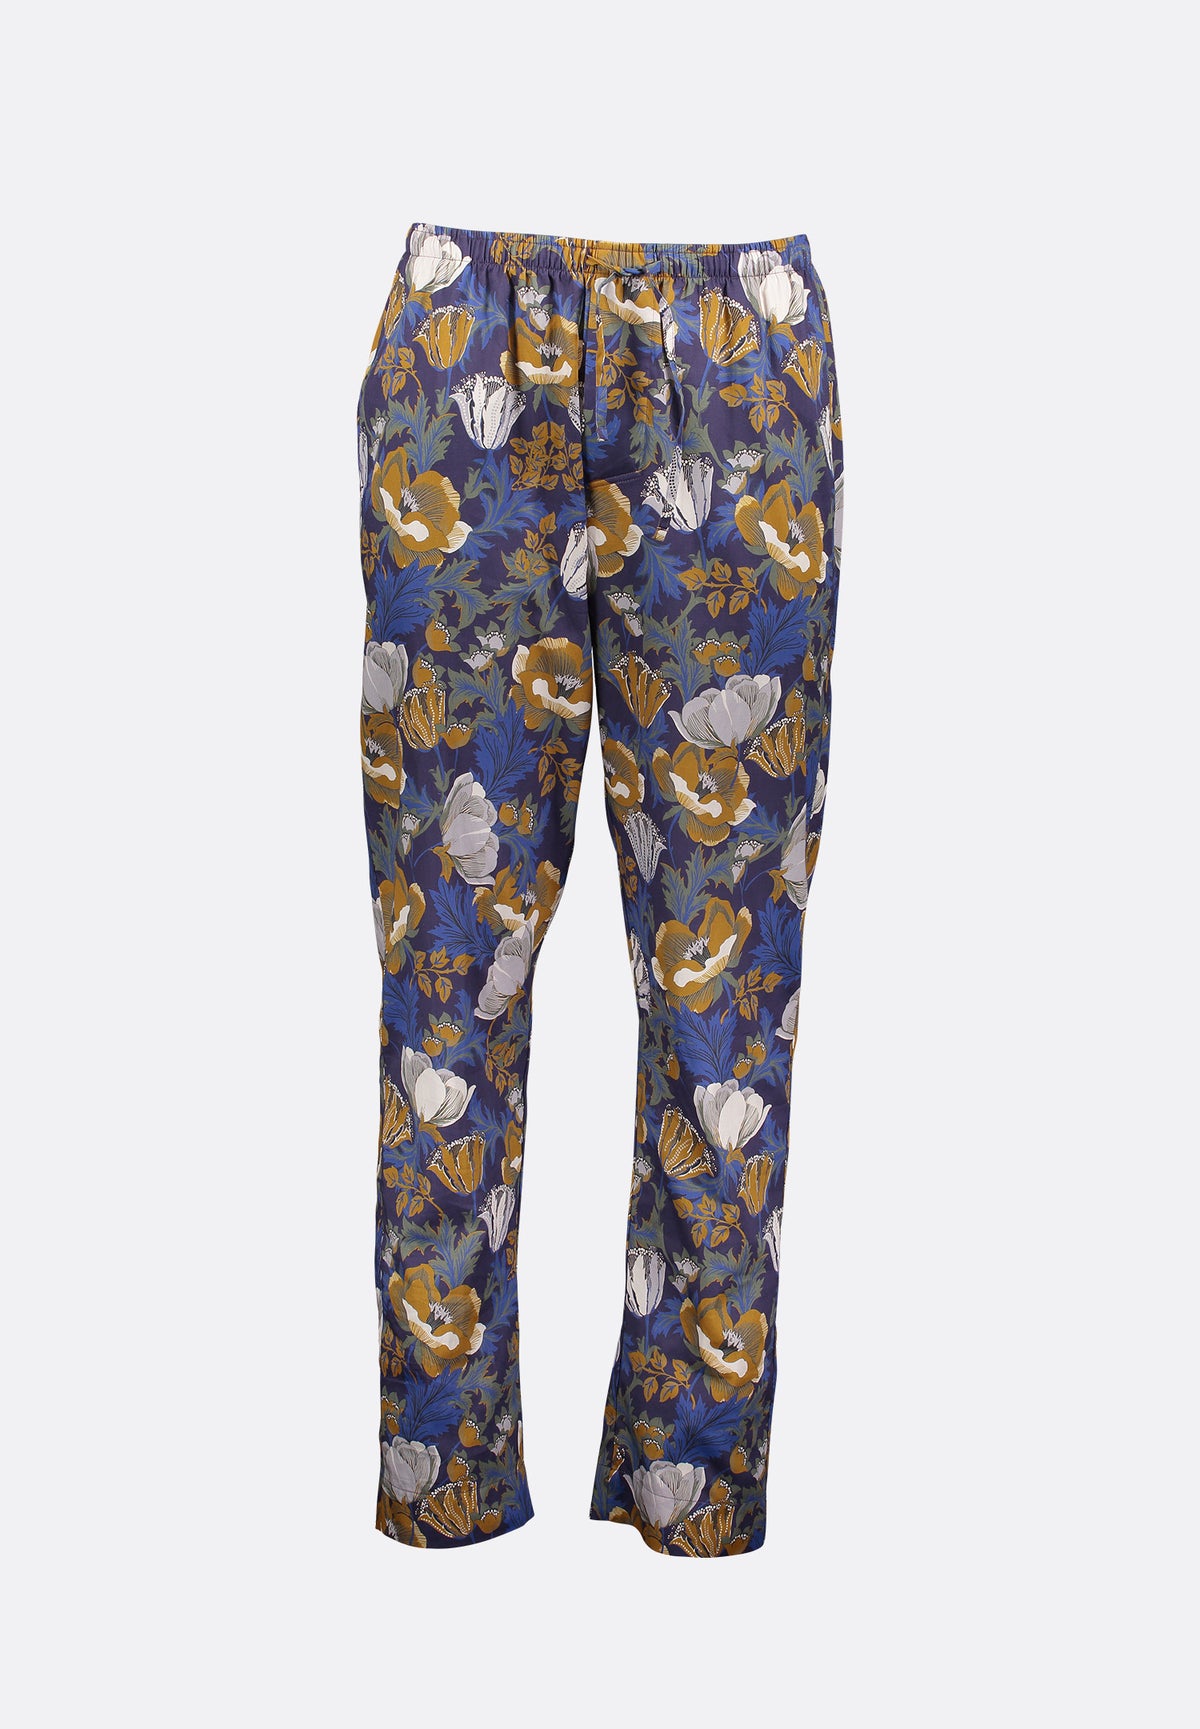 Cotton Sateen Print | Pants Long - Infinity blue